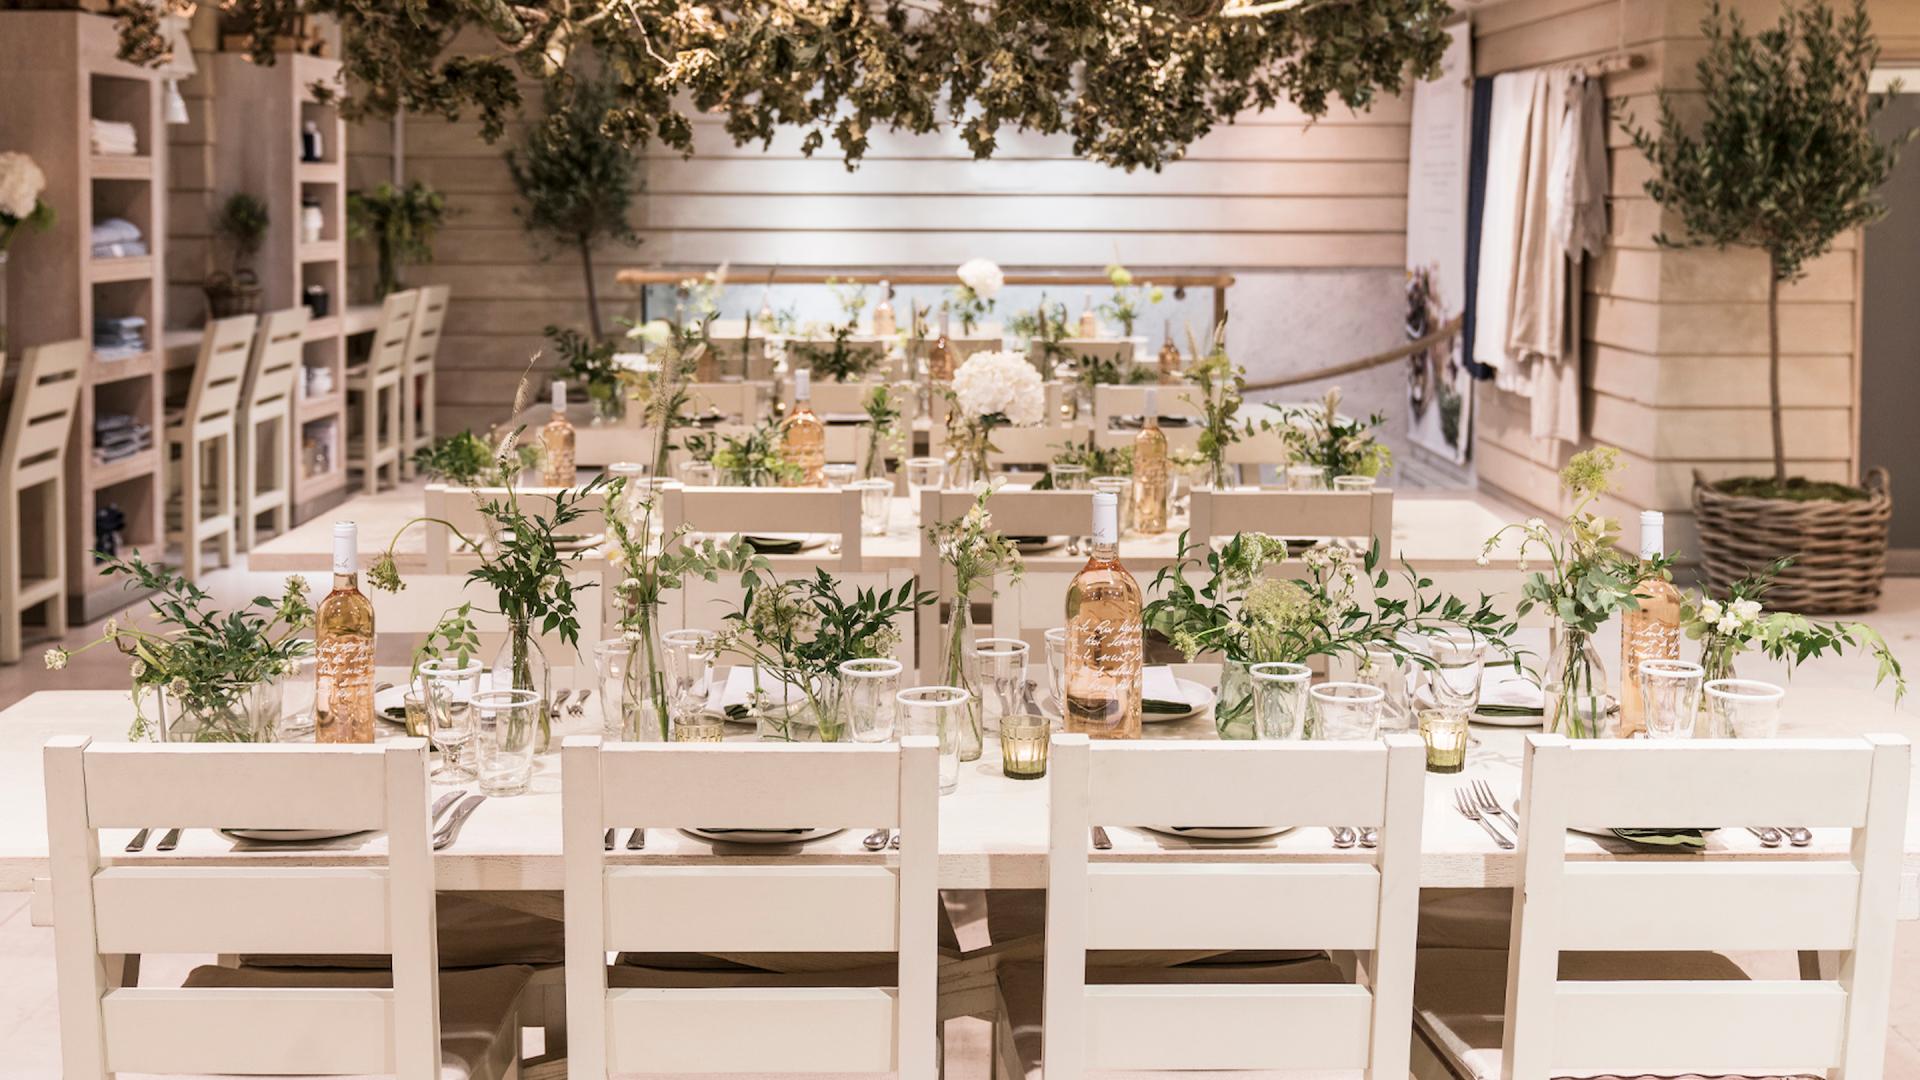 Find your Wedding Restaurant Venue in London